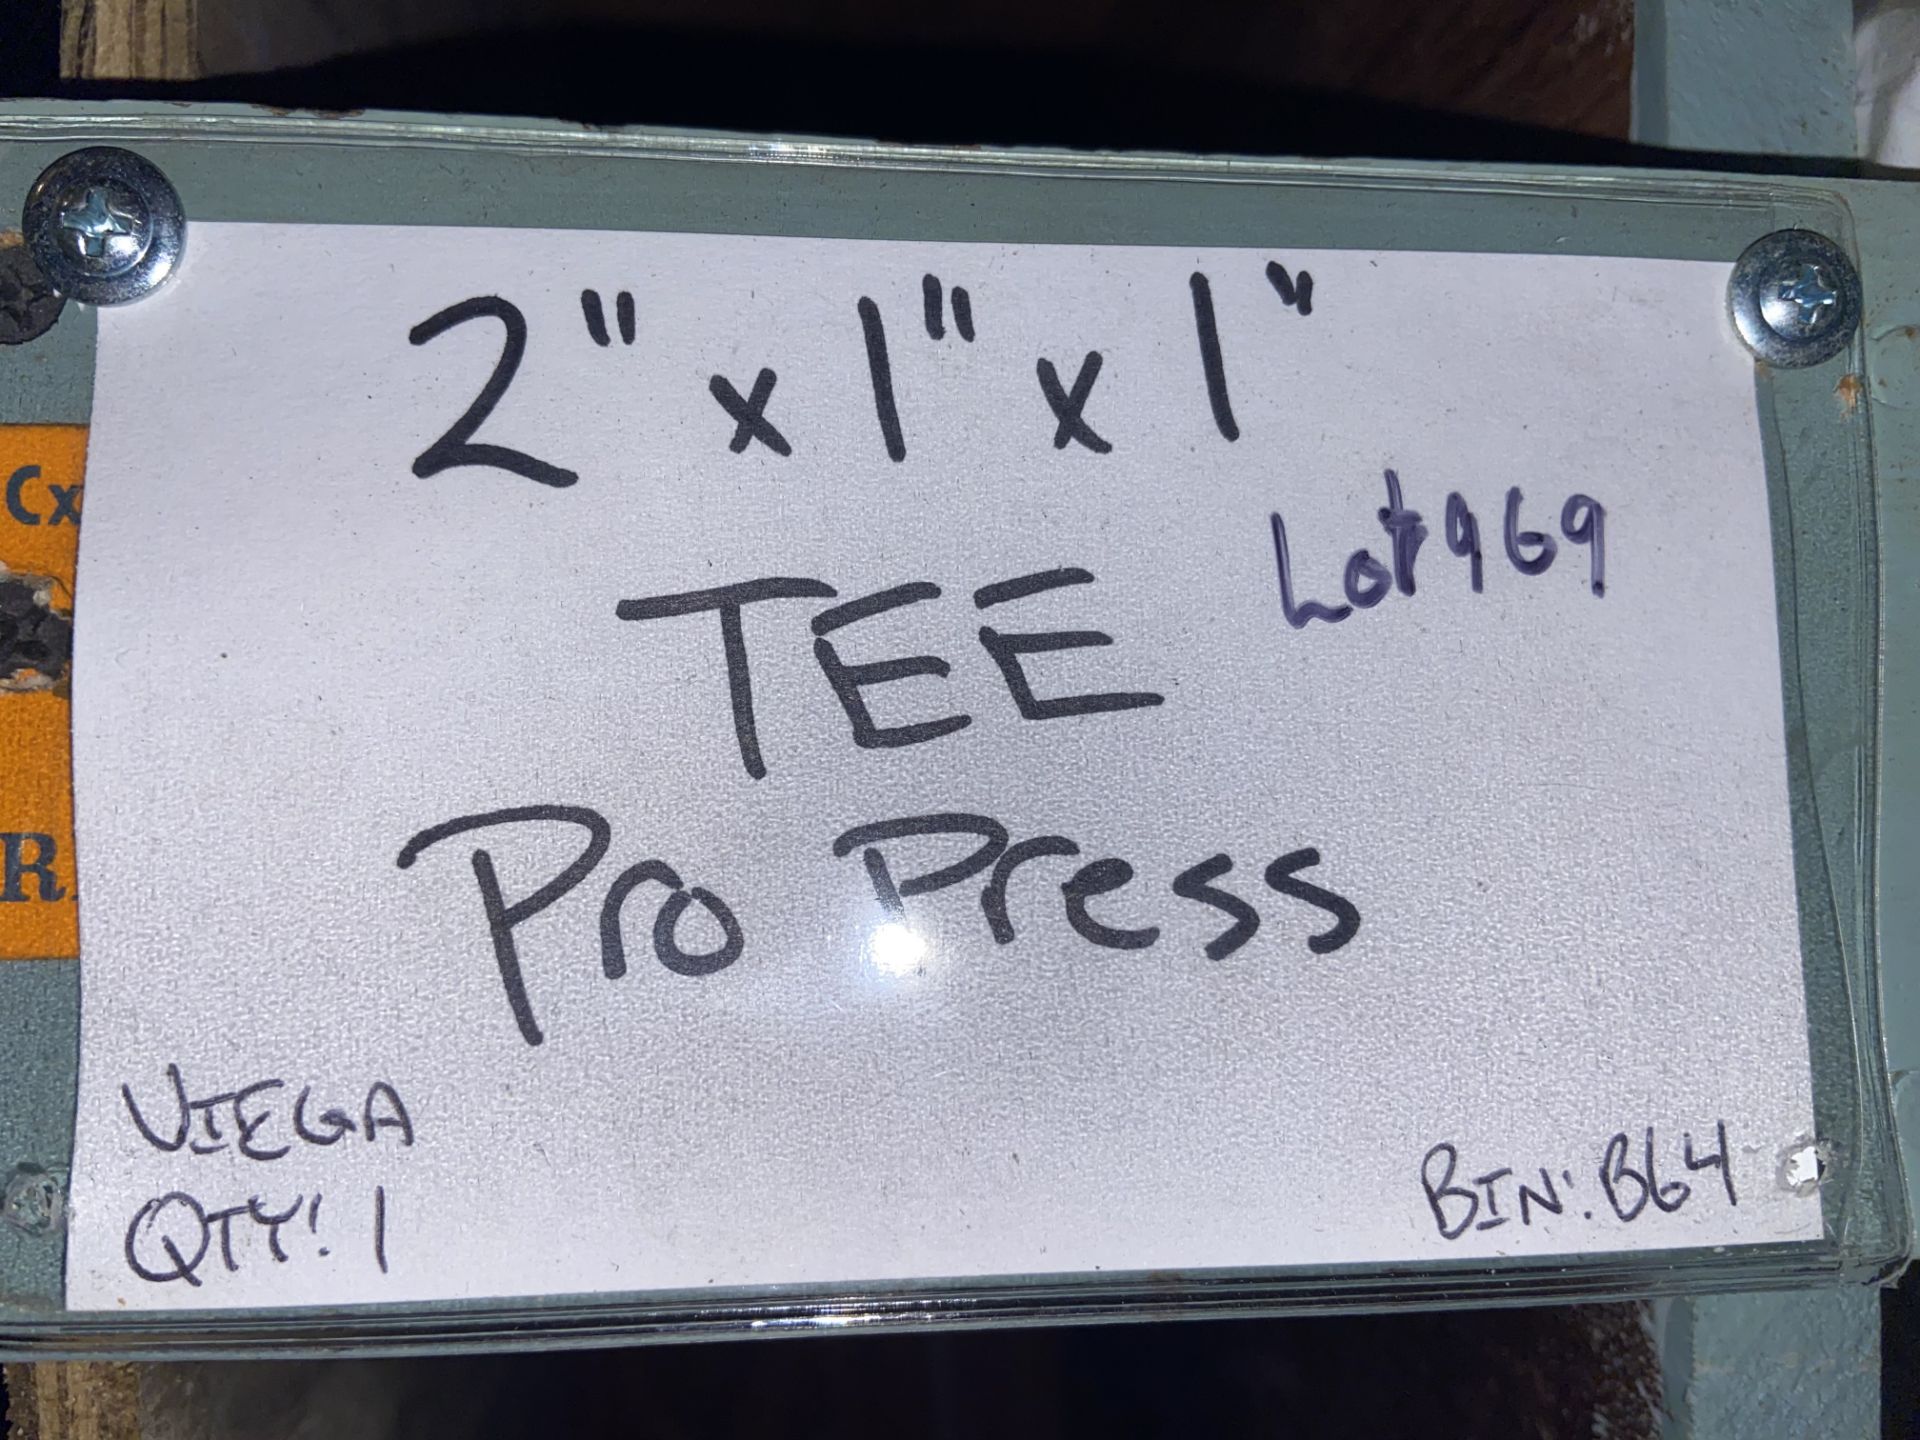 (1) VIEGA 2”x1 1/2” x 1 1/4” Tee Pro Press; (2) NIBCO 1 1/4” 1 1/4”x 1/2” Tee Pro Press; VIEGA (1) - Image 12 of 33